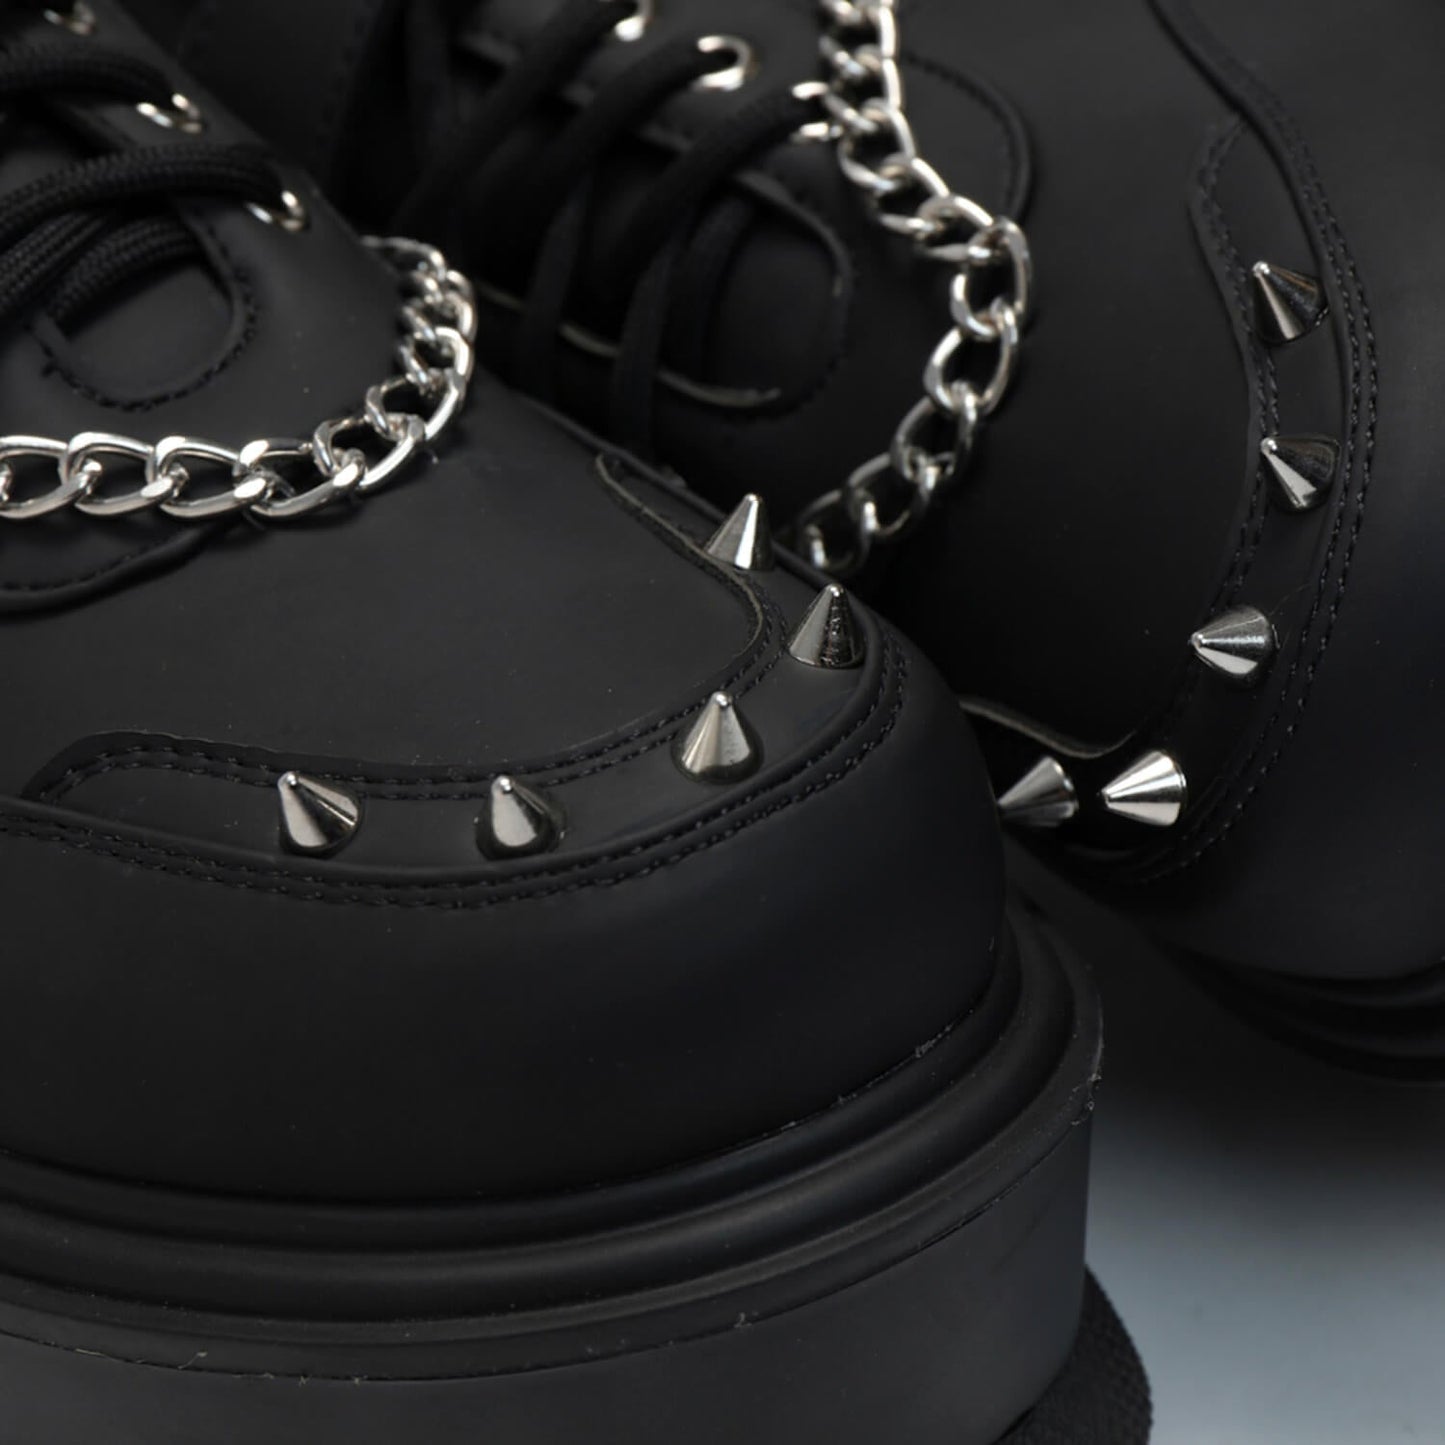 Retrograde Rebel Black Platform Shoes - Shoes - KOI Footwear - Black - Front View